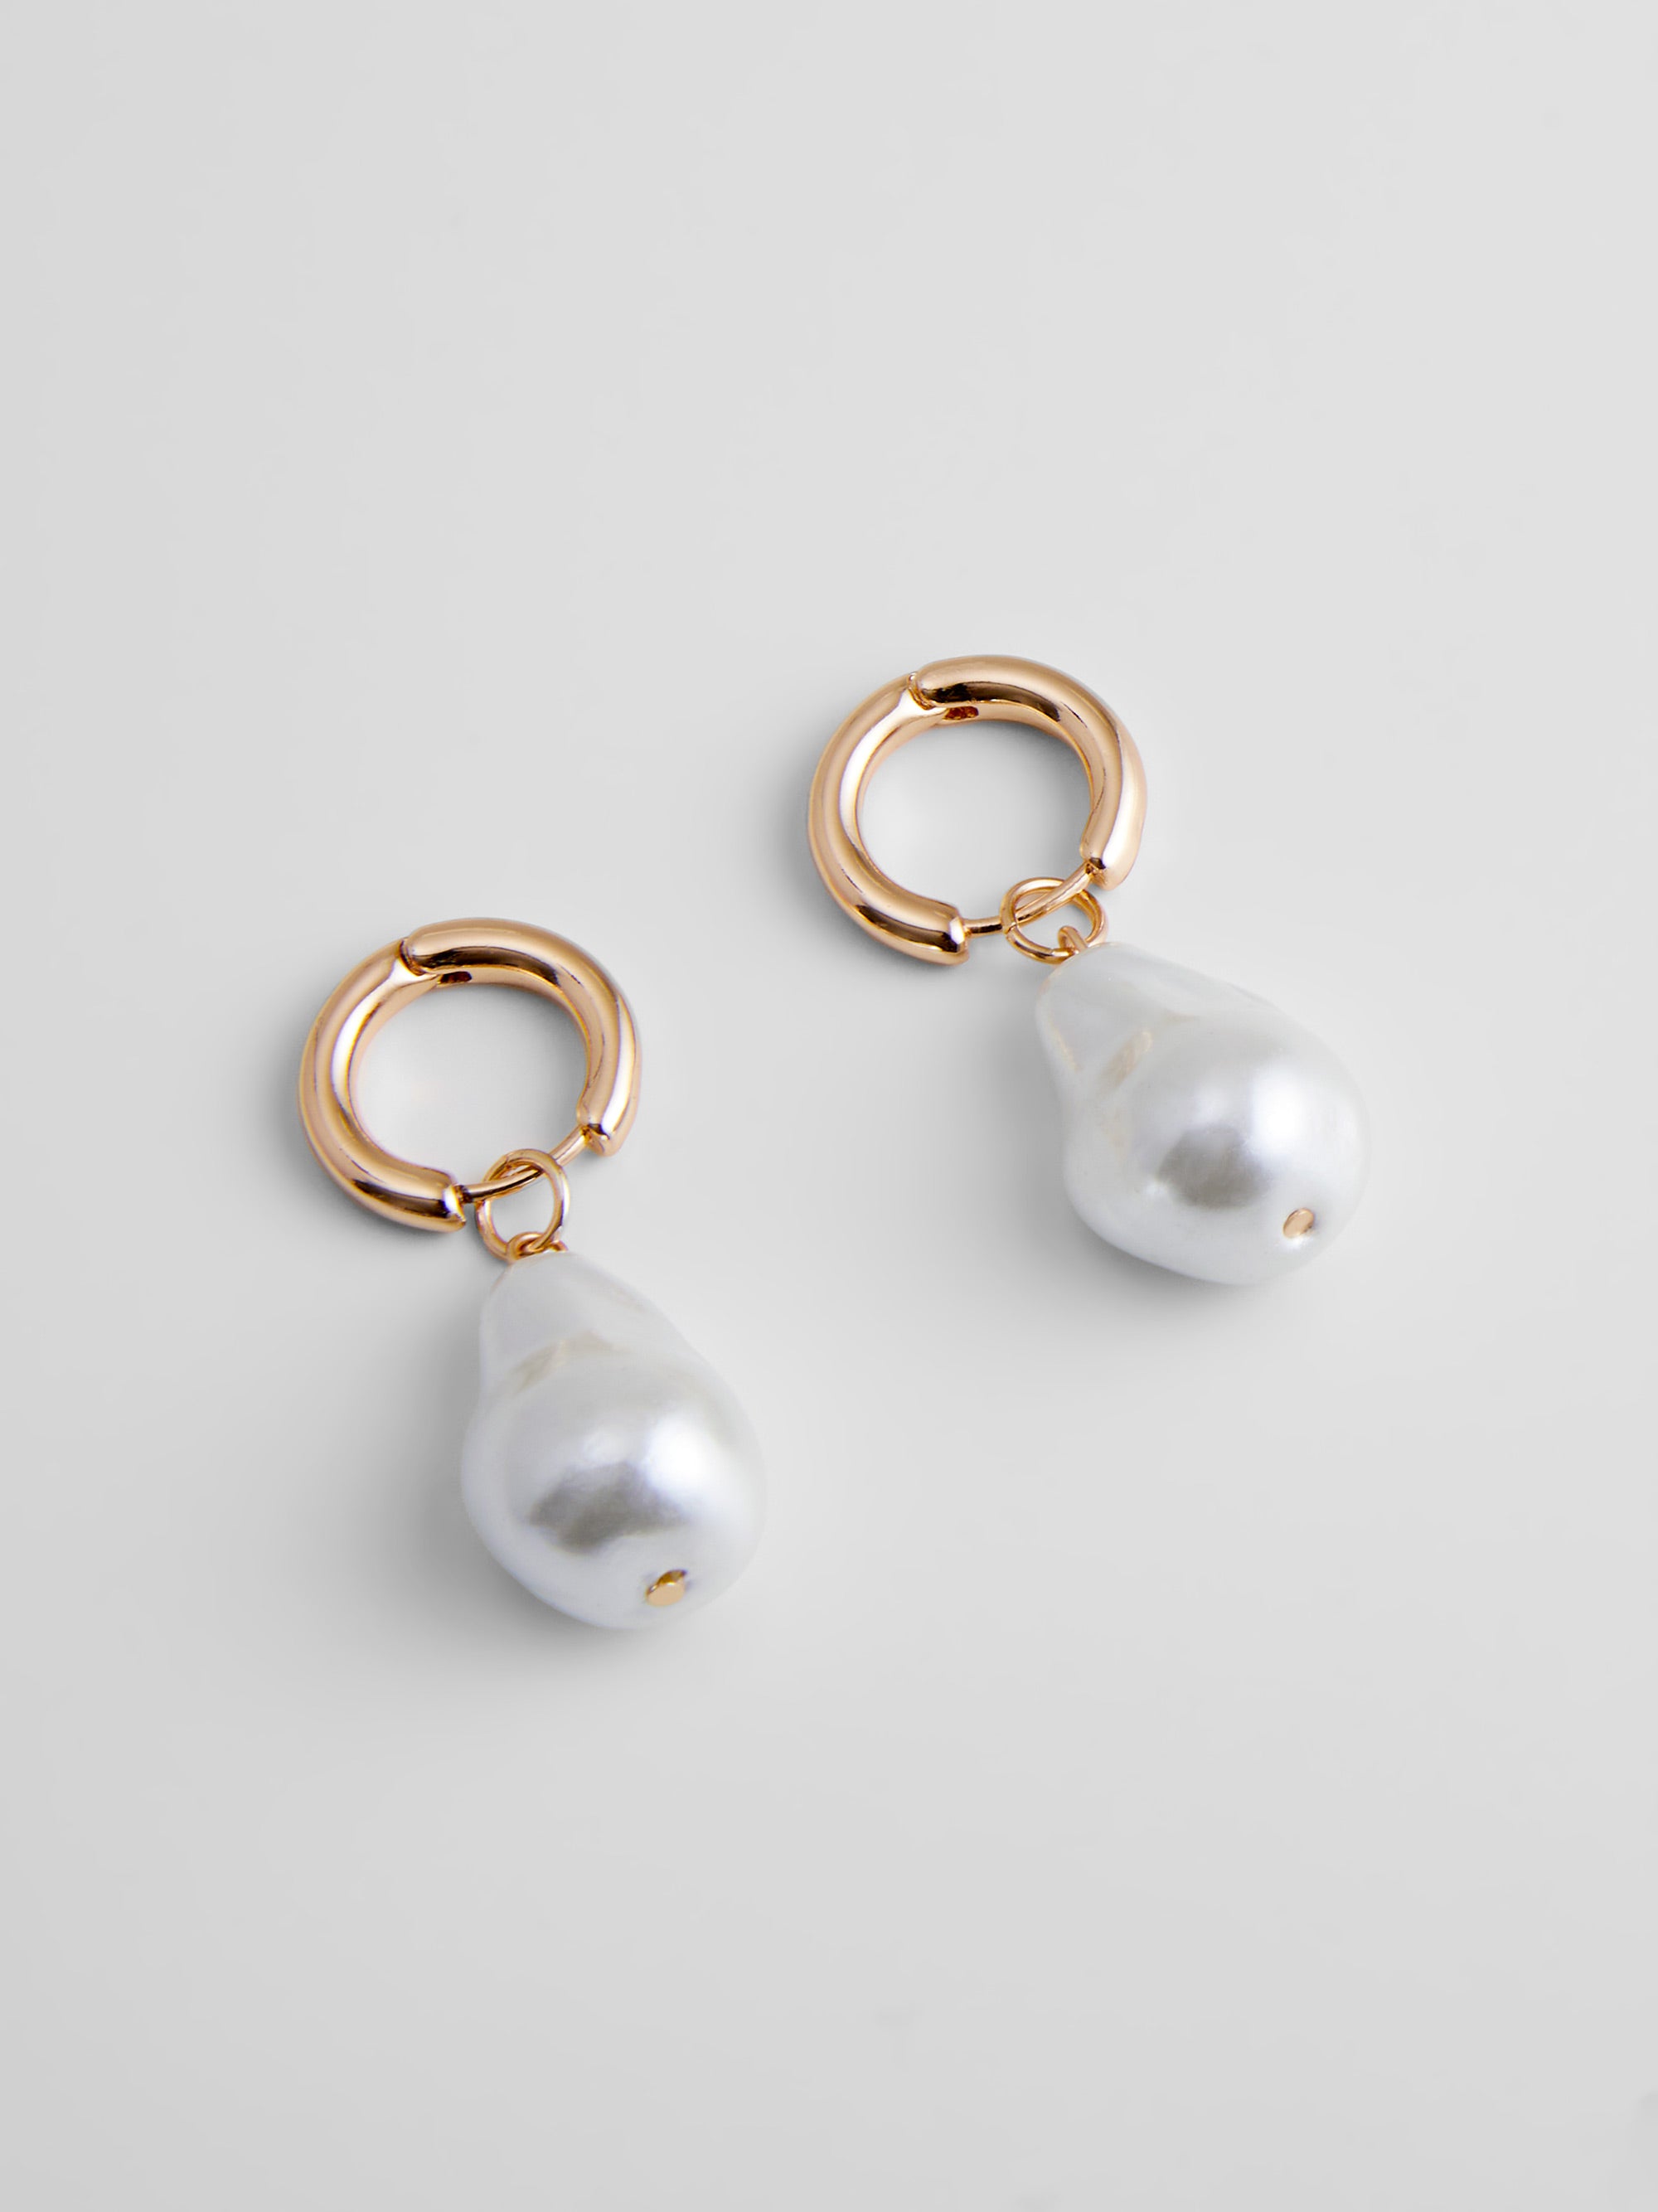 INS Trend Stainless Steel Freshwater Pearl Drop Hoop Earrings for Women 18K  Gold Plated Daily Wear Earring Mujer Gift - AliExpress